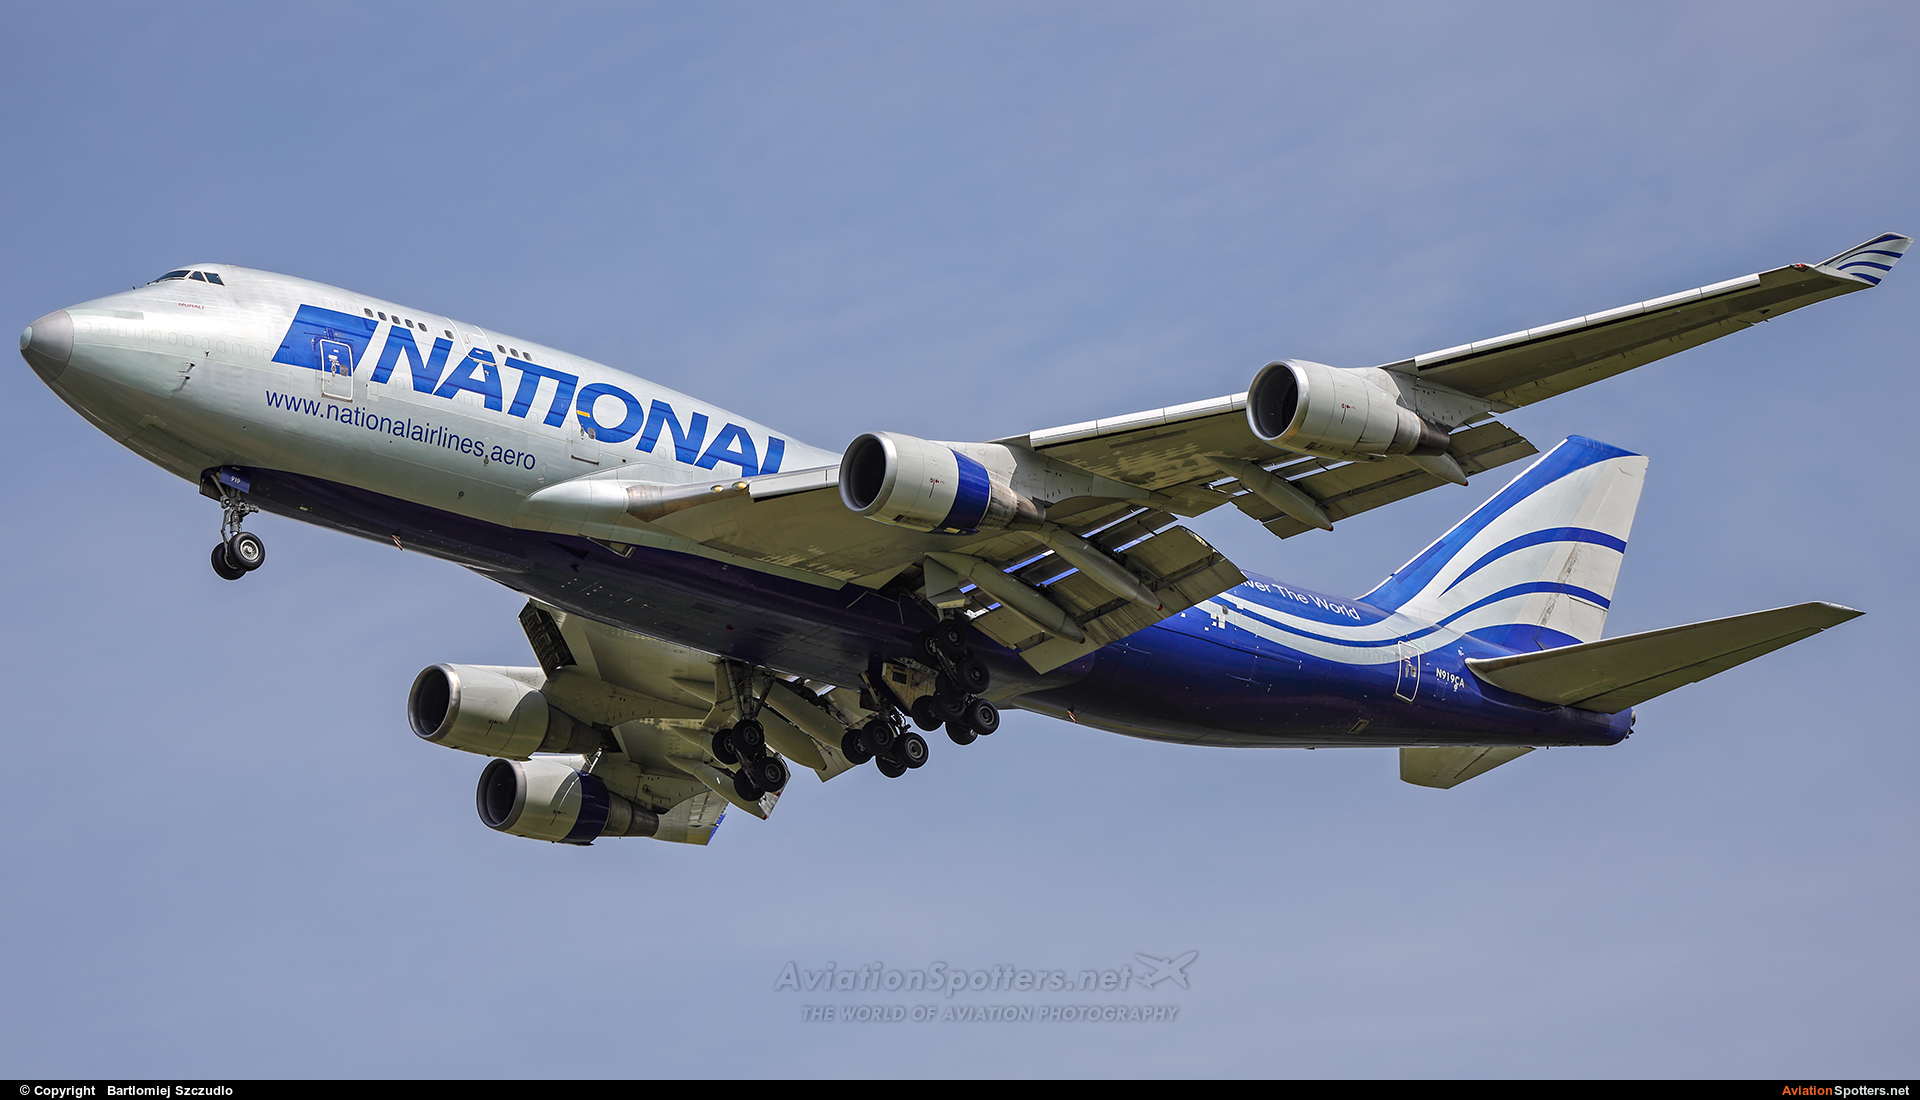 National Airlines  -  747-400  (N919CA) By Bartlomiej Szczudlo  (BartekSzczudlo)